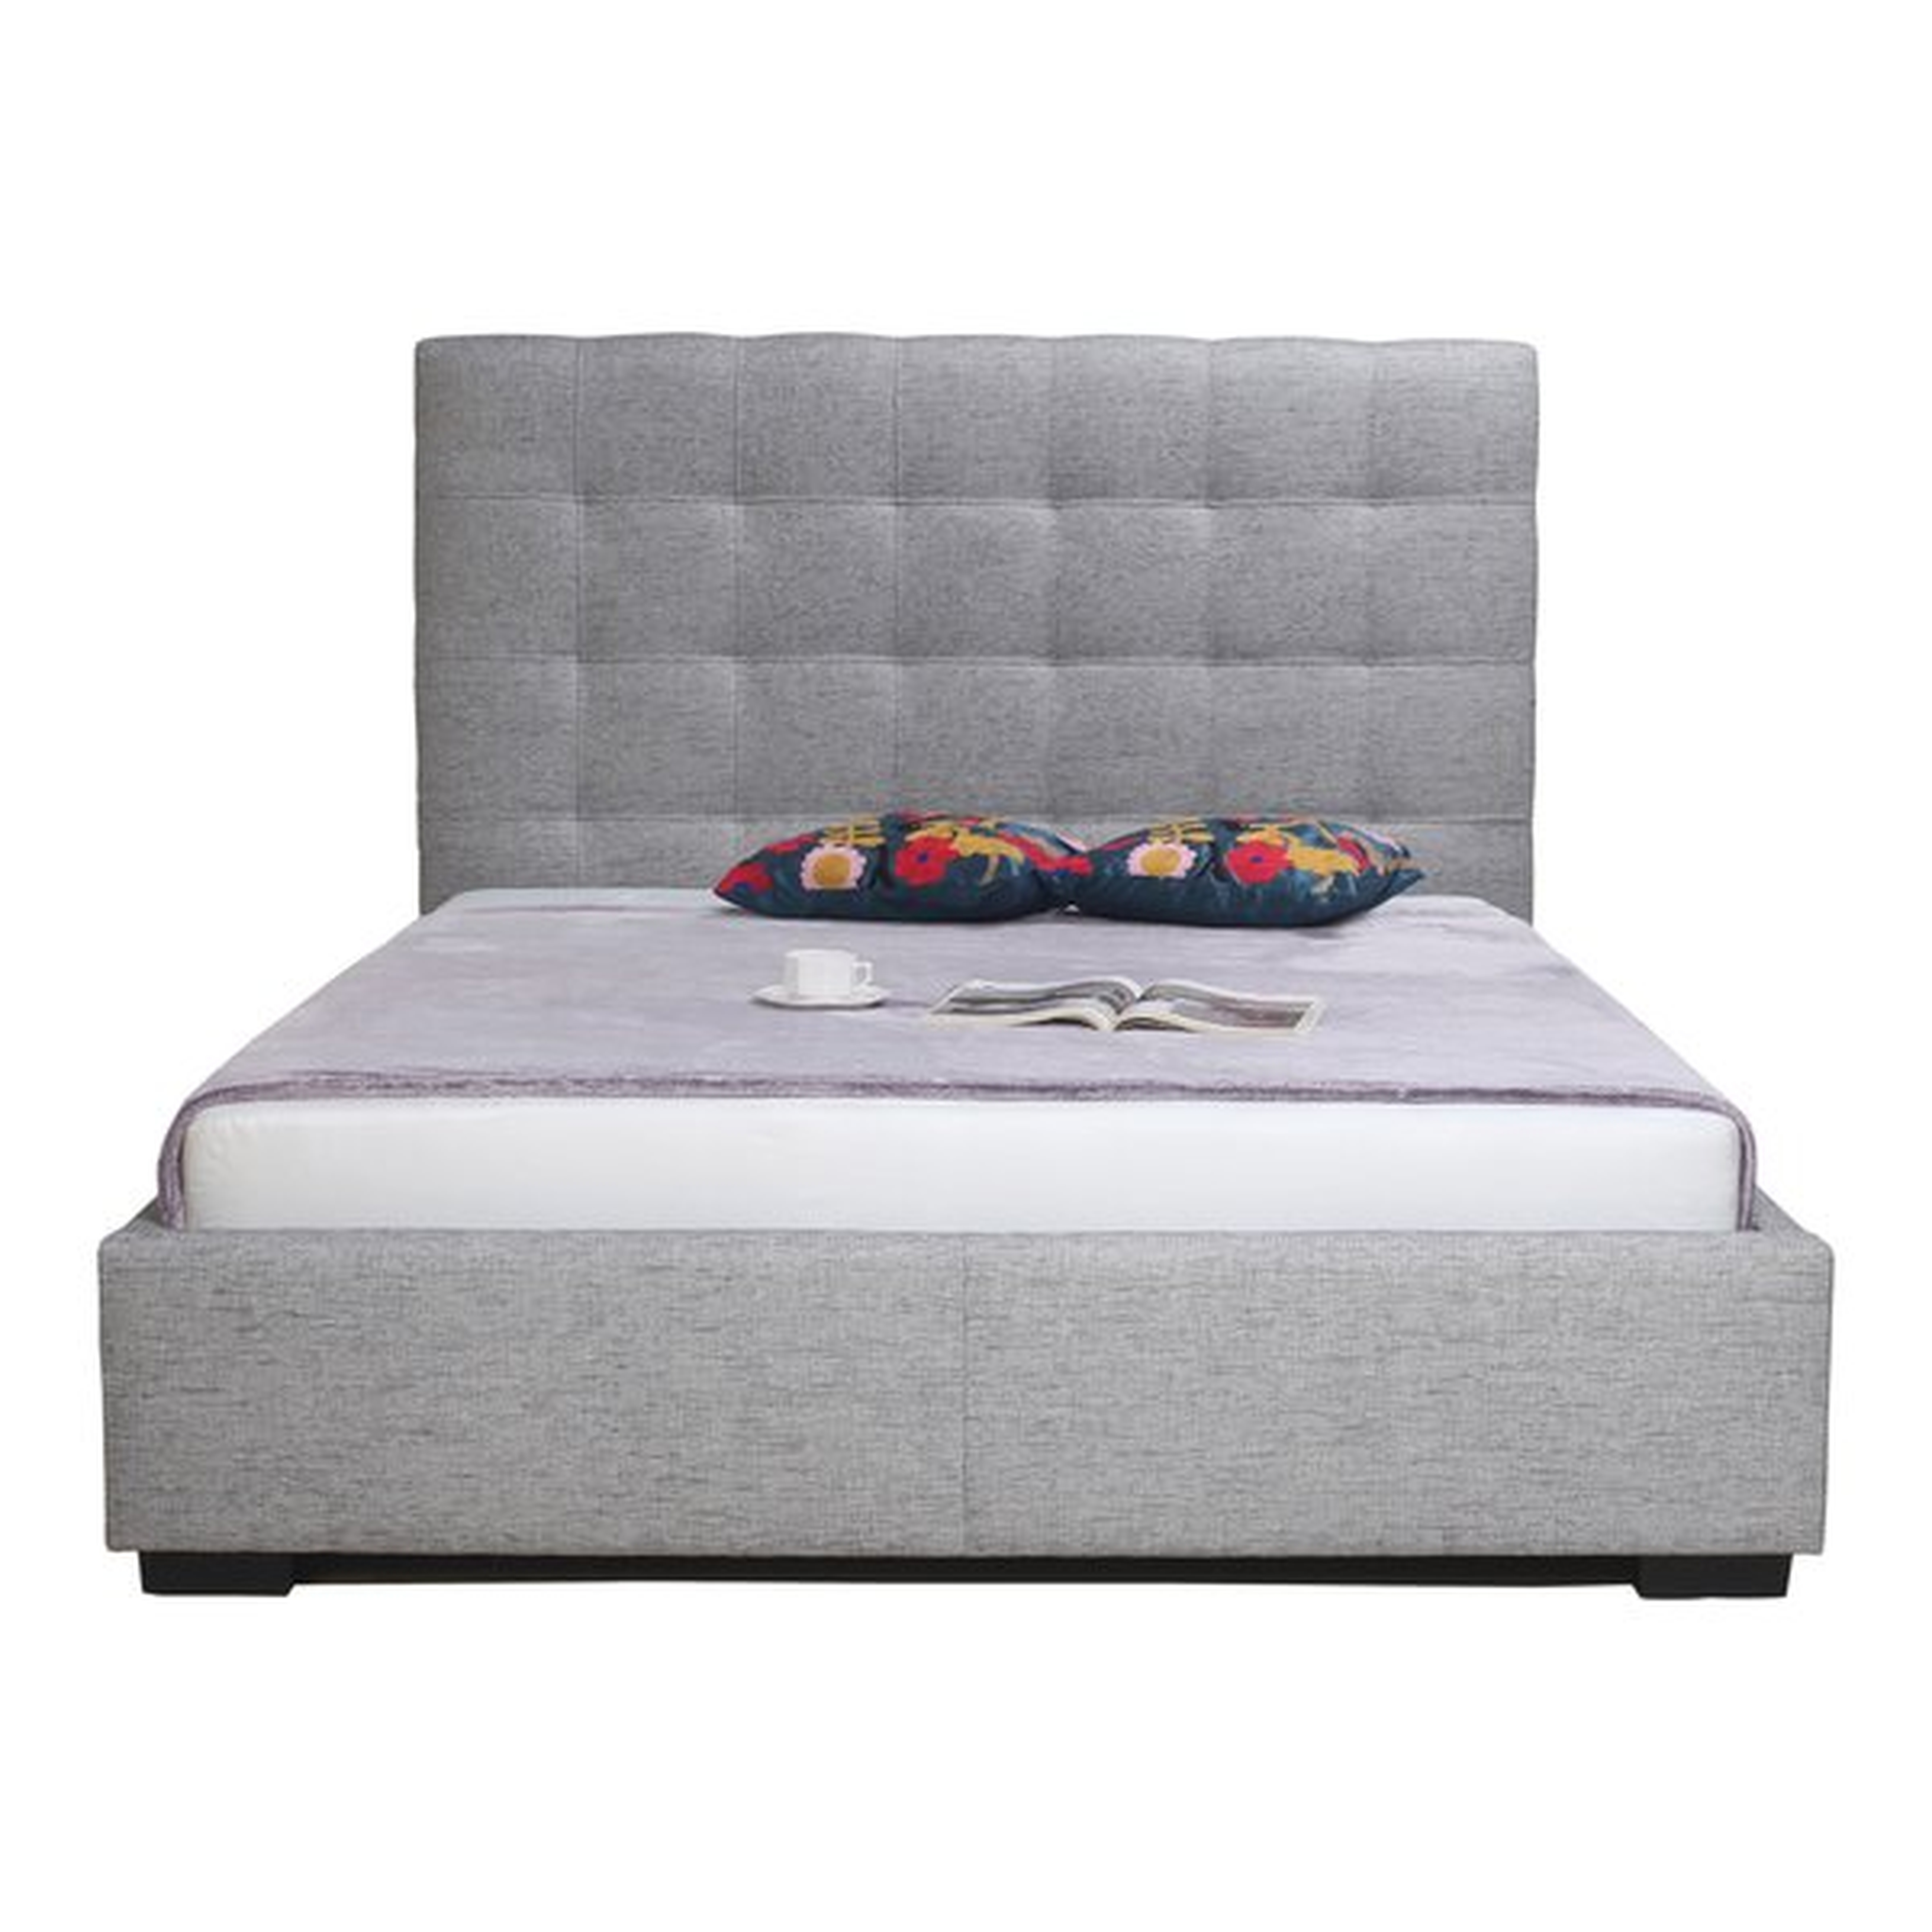 Eddyville Upholstered Storage Platform Bed - Wayfair